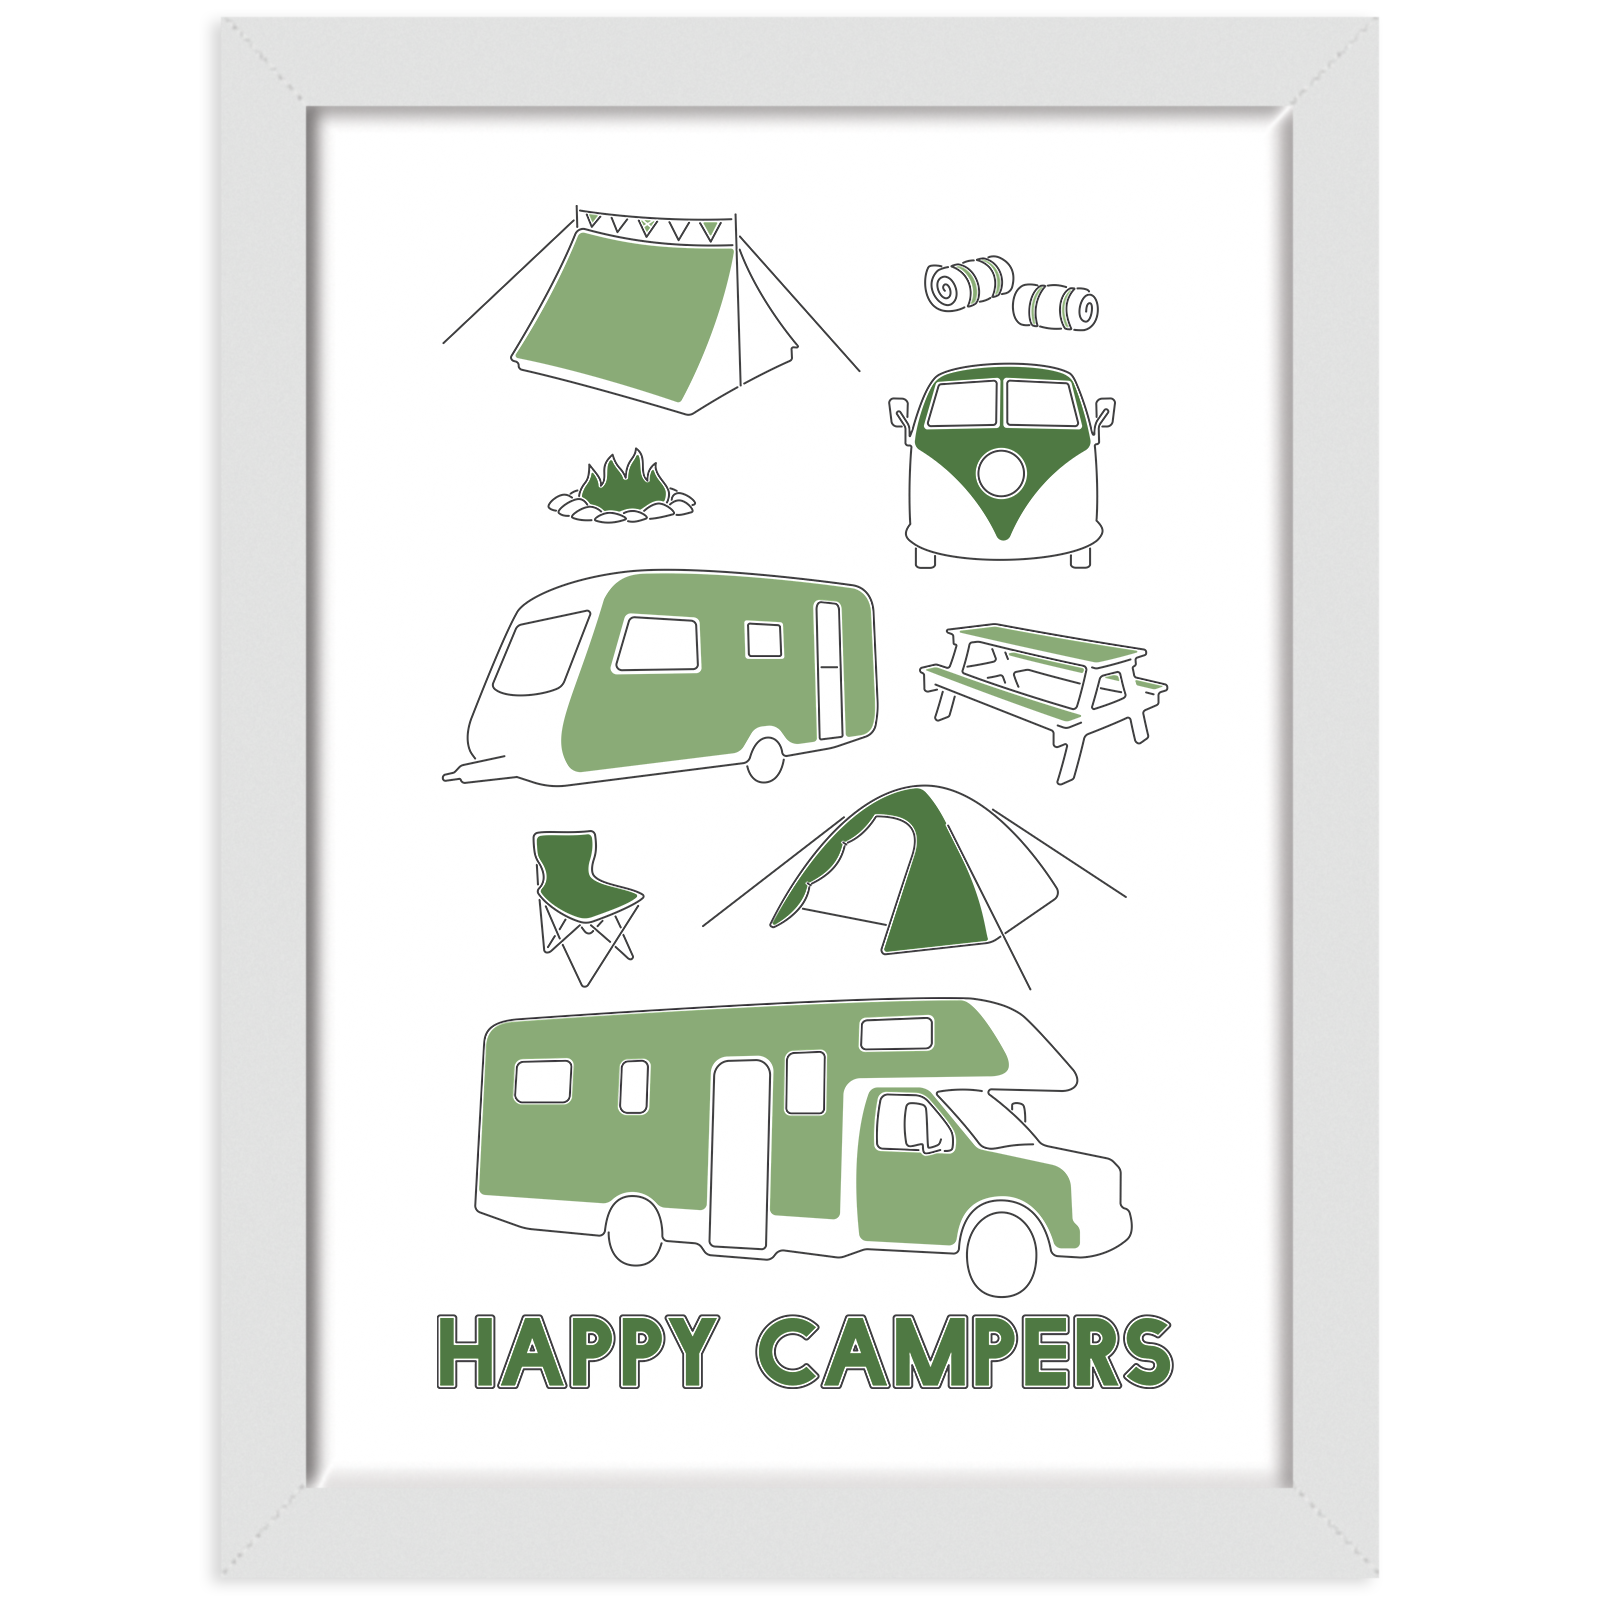 Camping print white frame